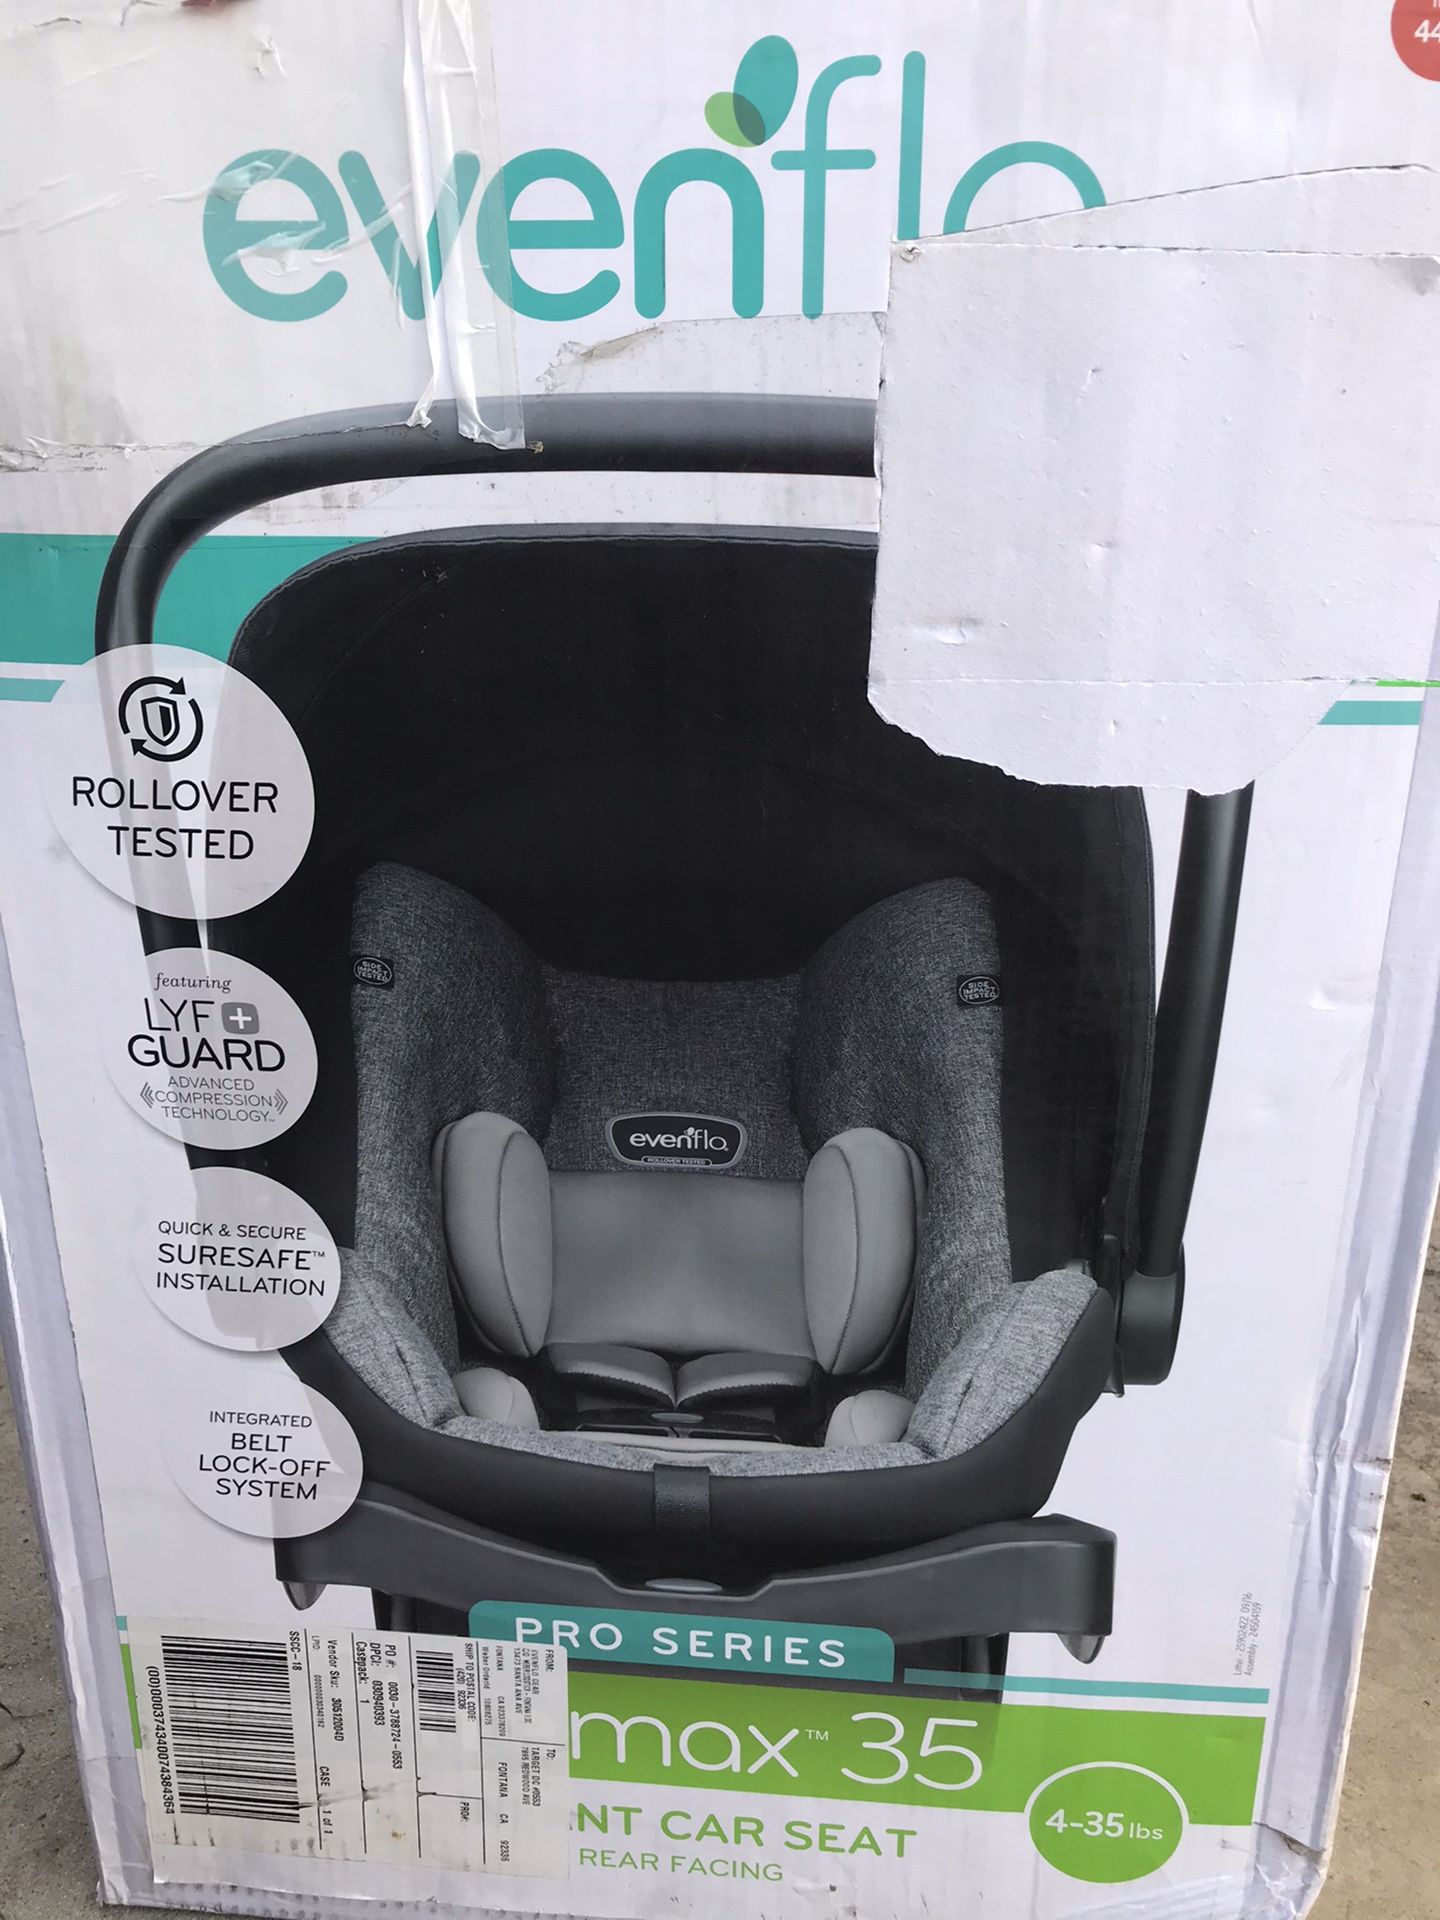 New evenflo infant car seat